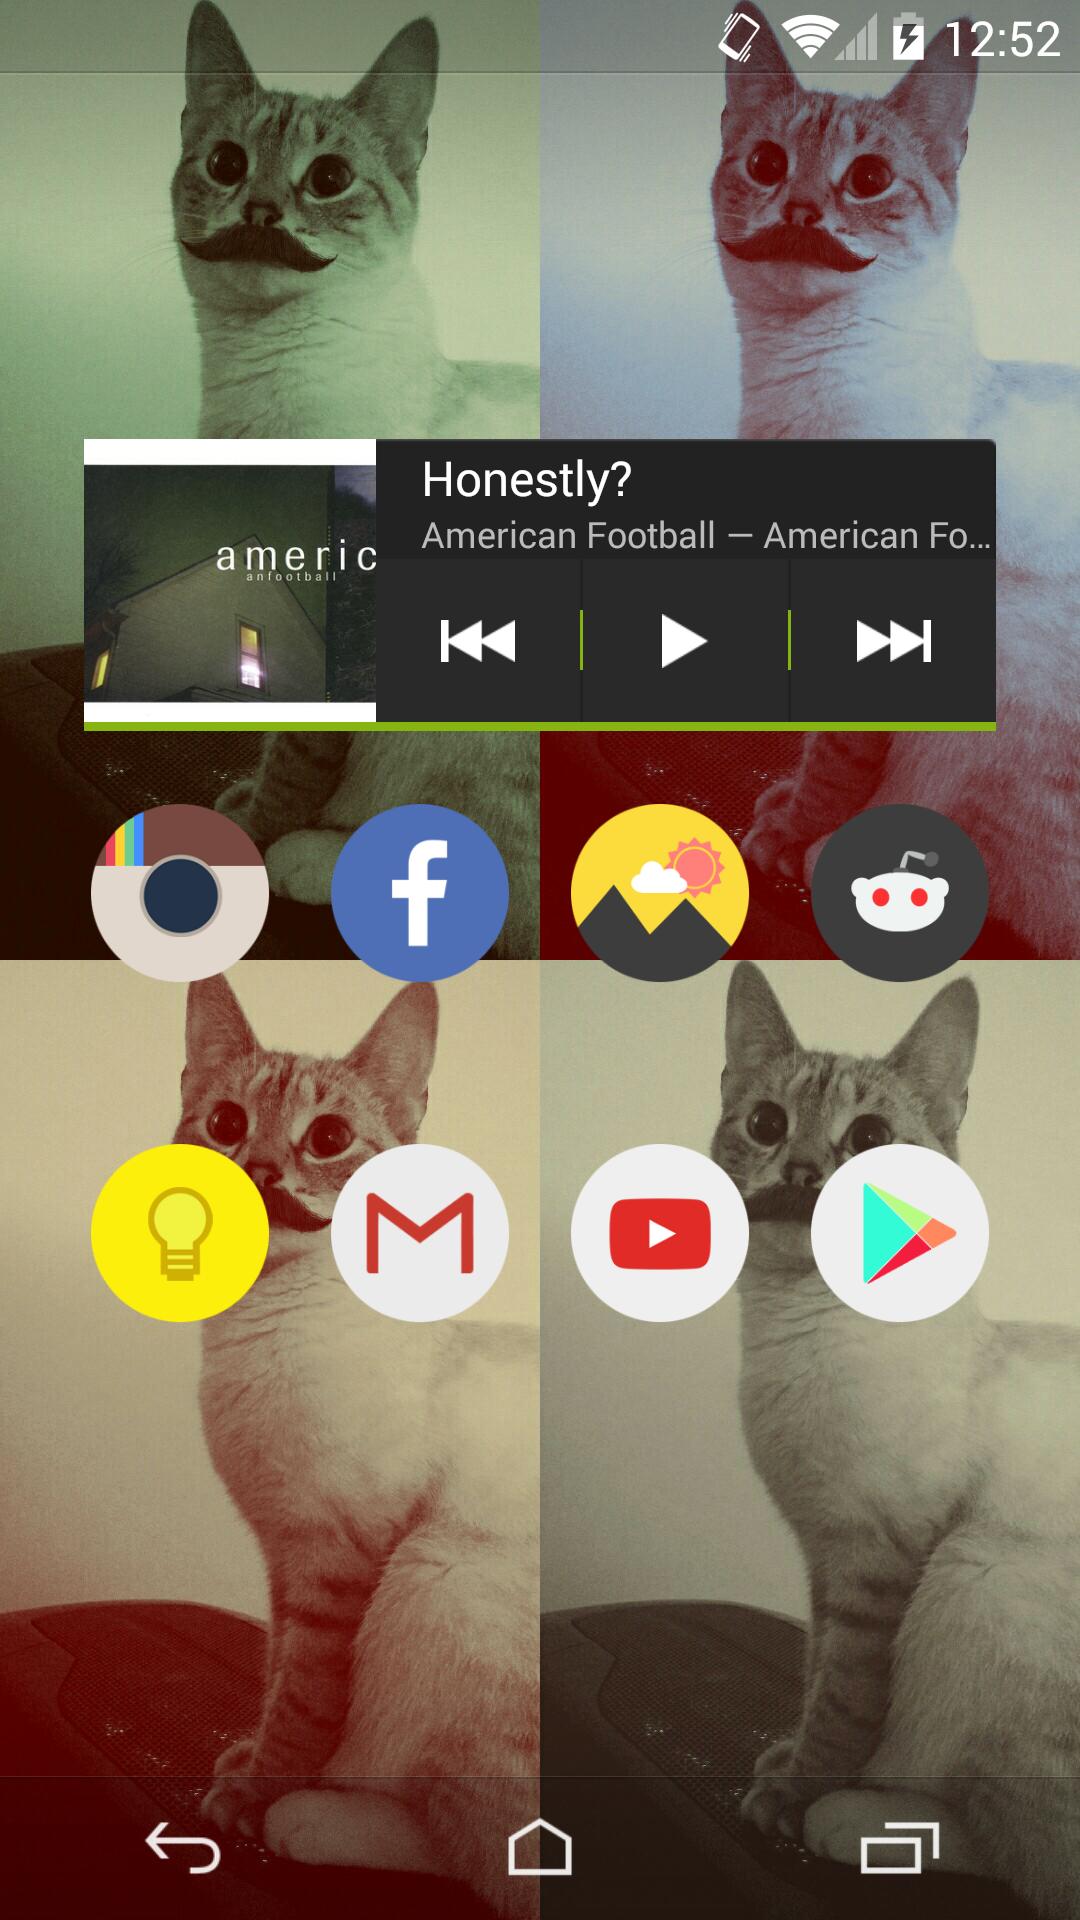 share-wallpaper-homescreen-kalian-para-pengguna-android